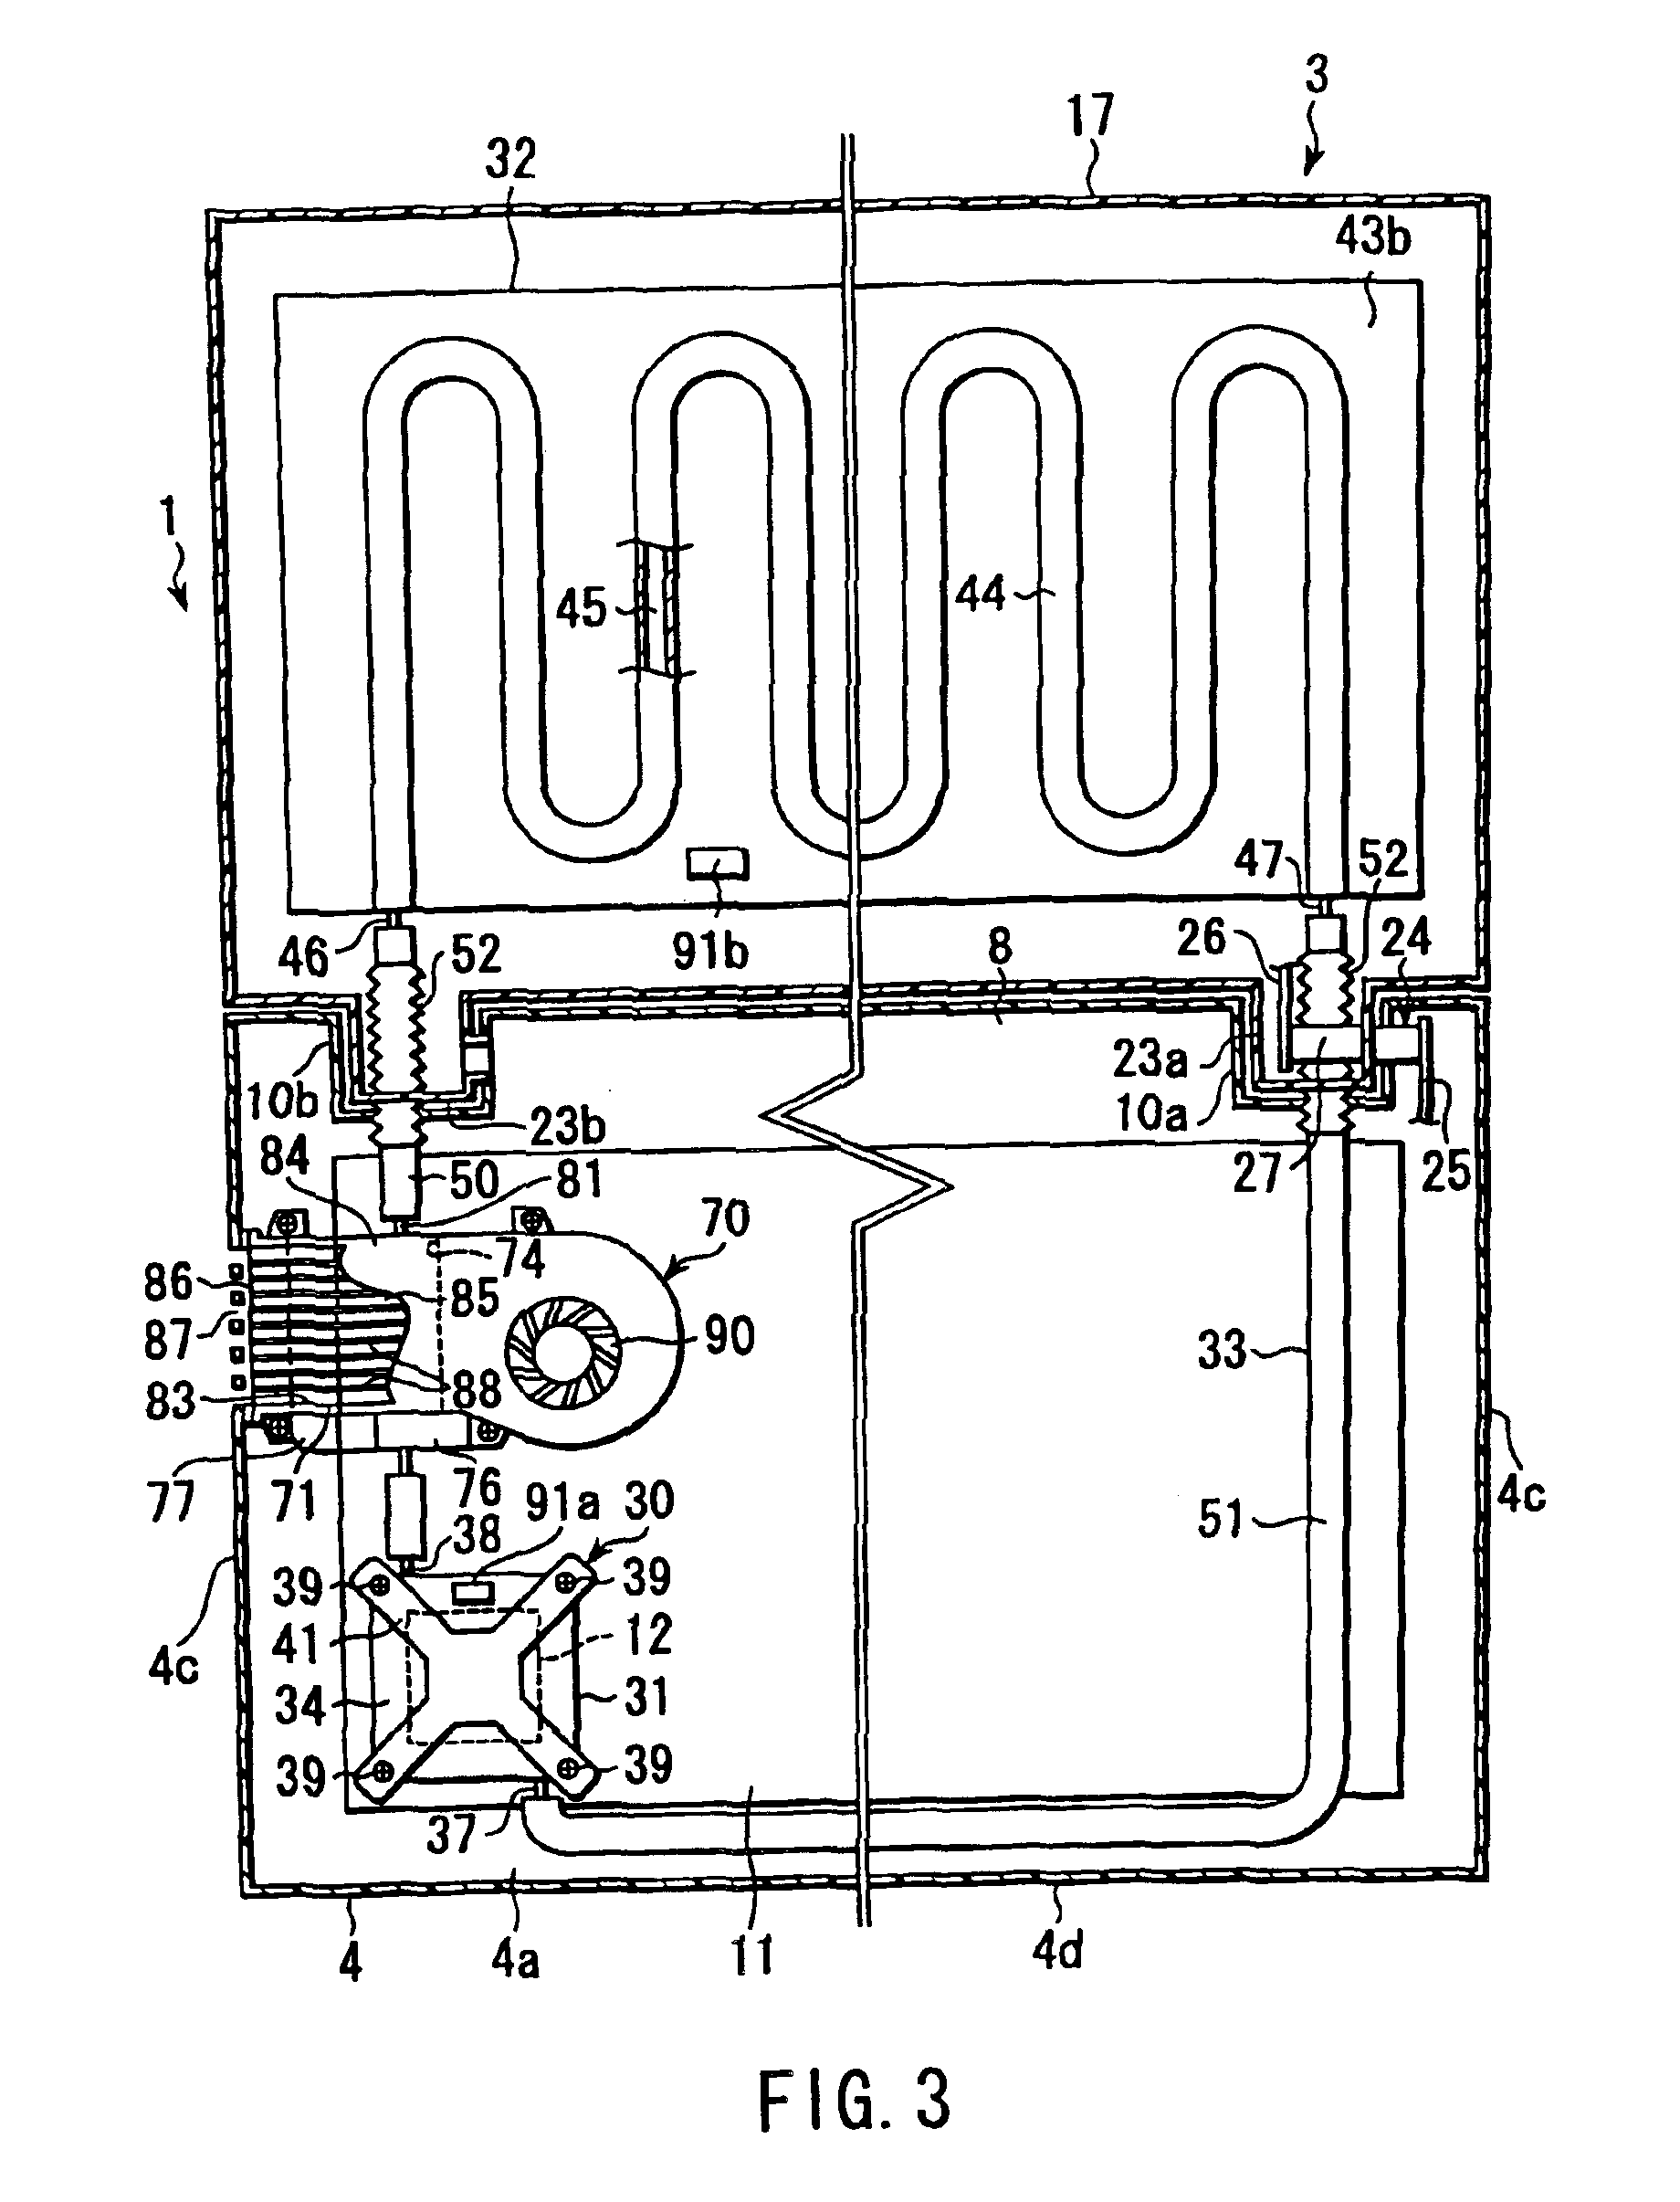 Electronic apparatus including a circulation path for circulating cooling medium